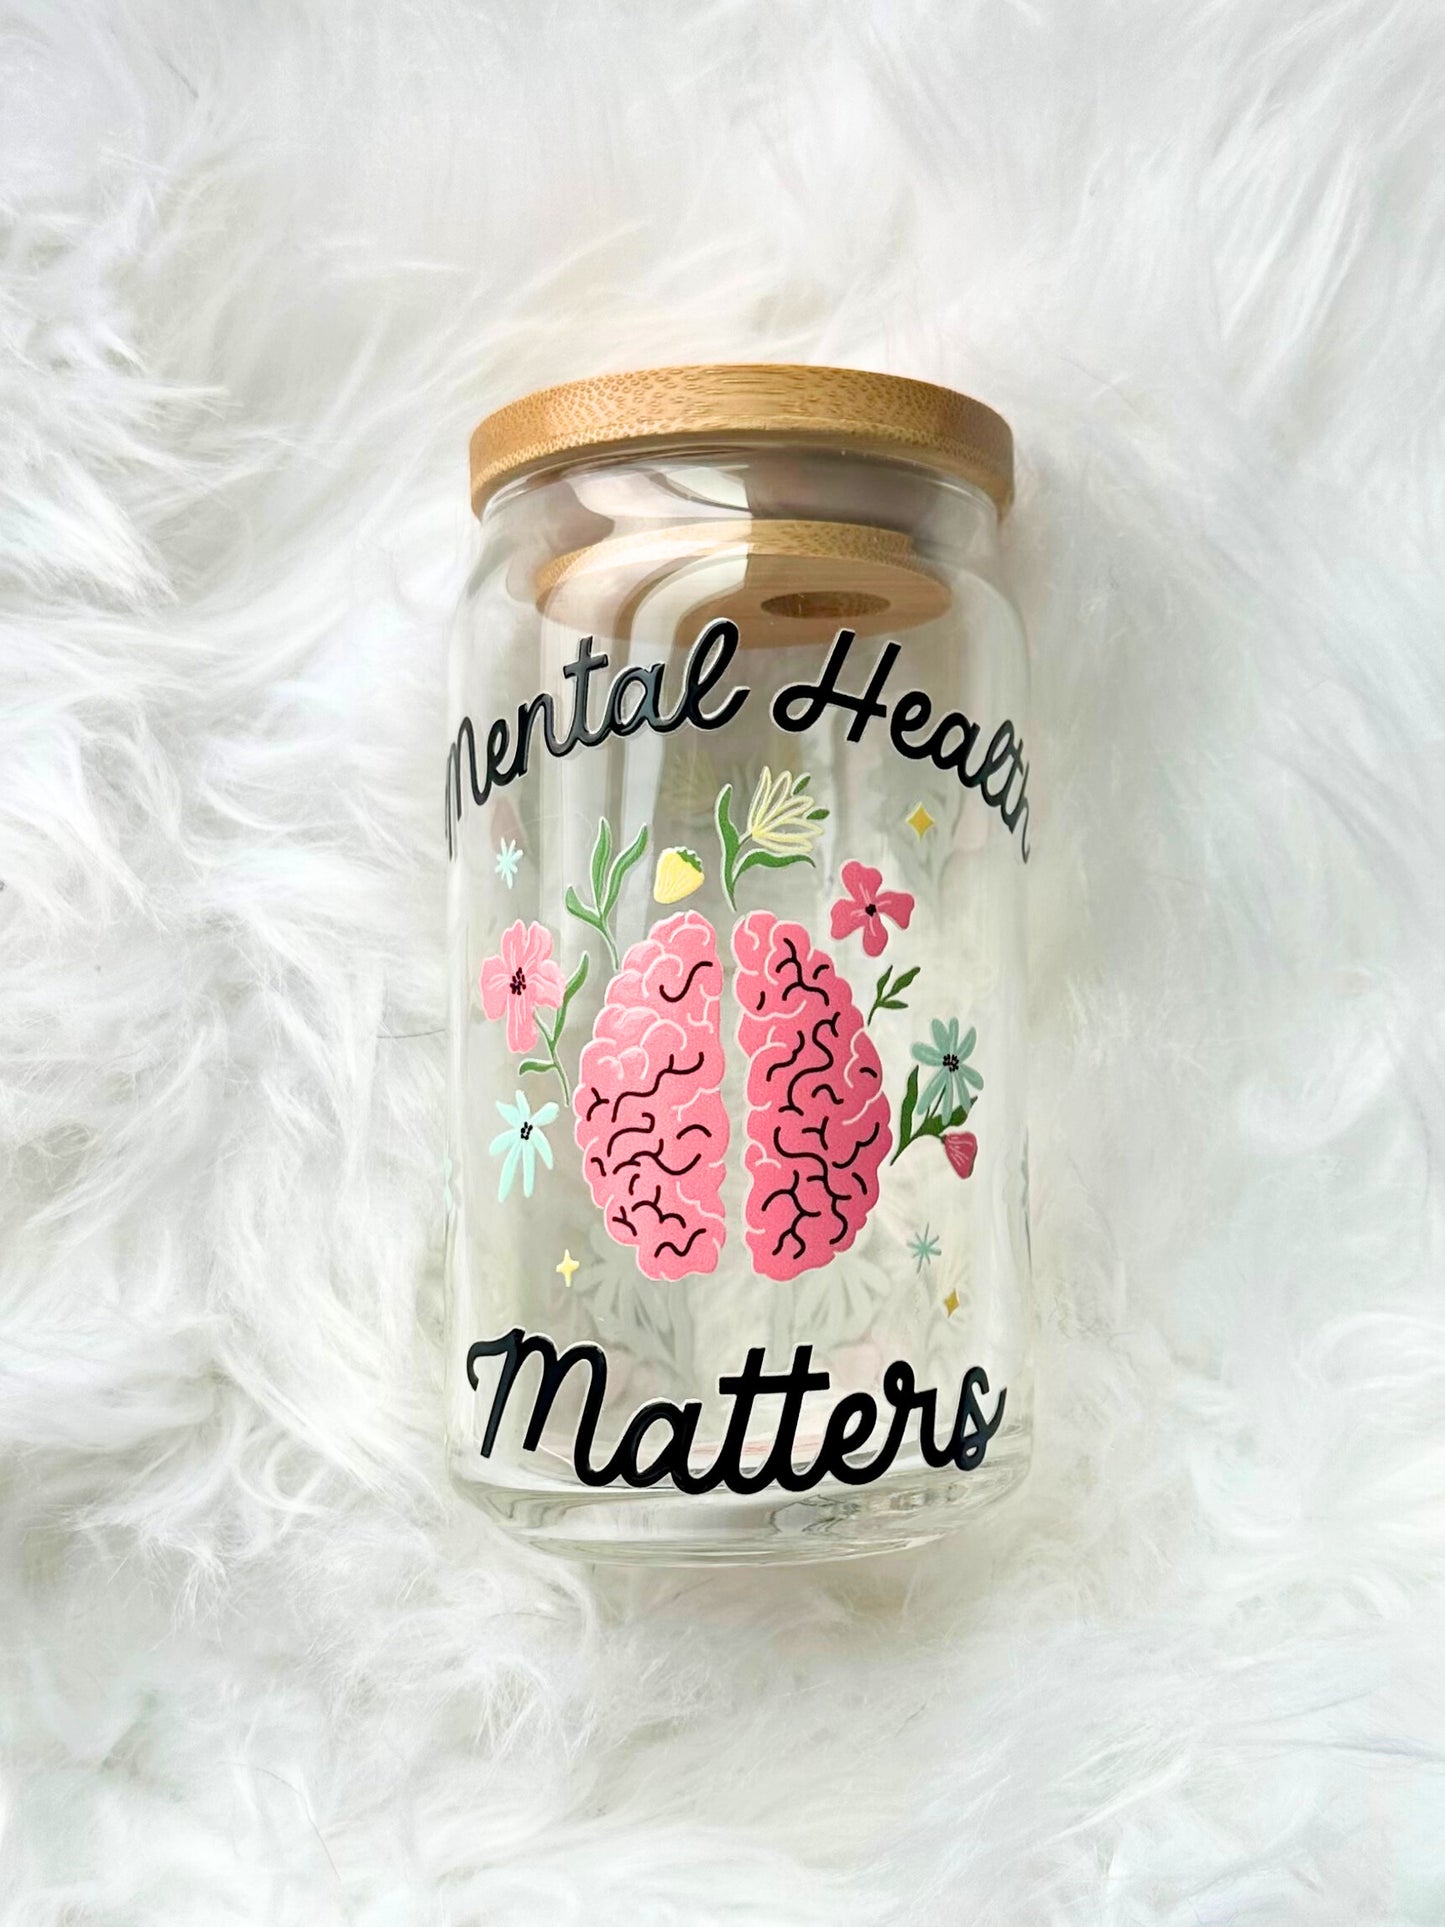 Mental health matters glass